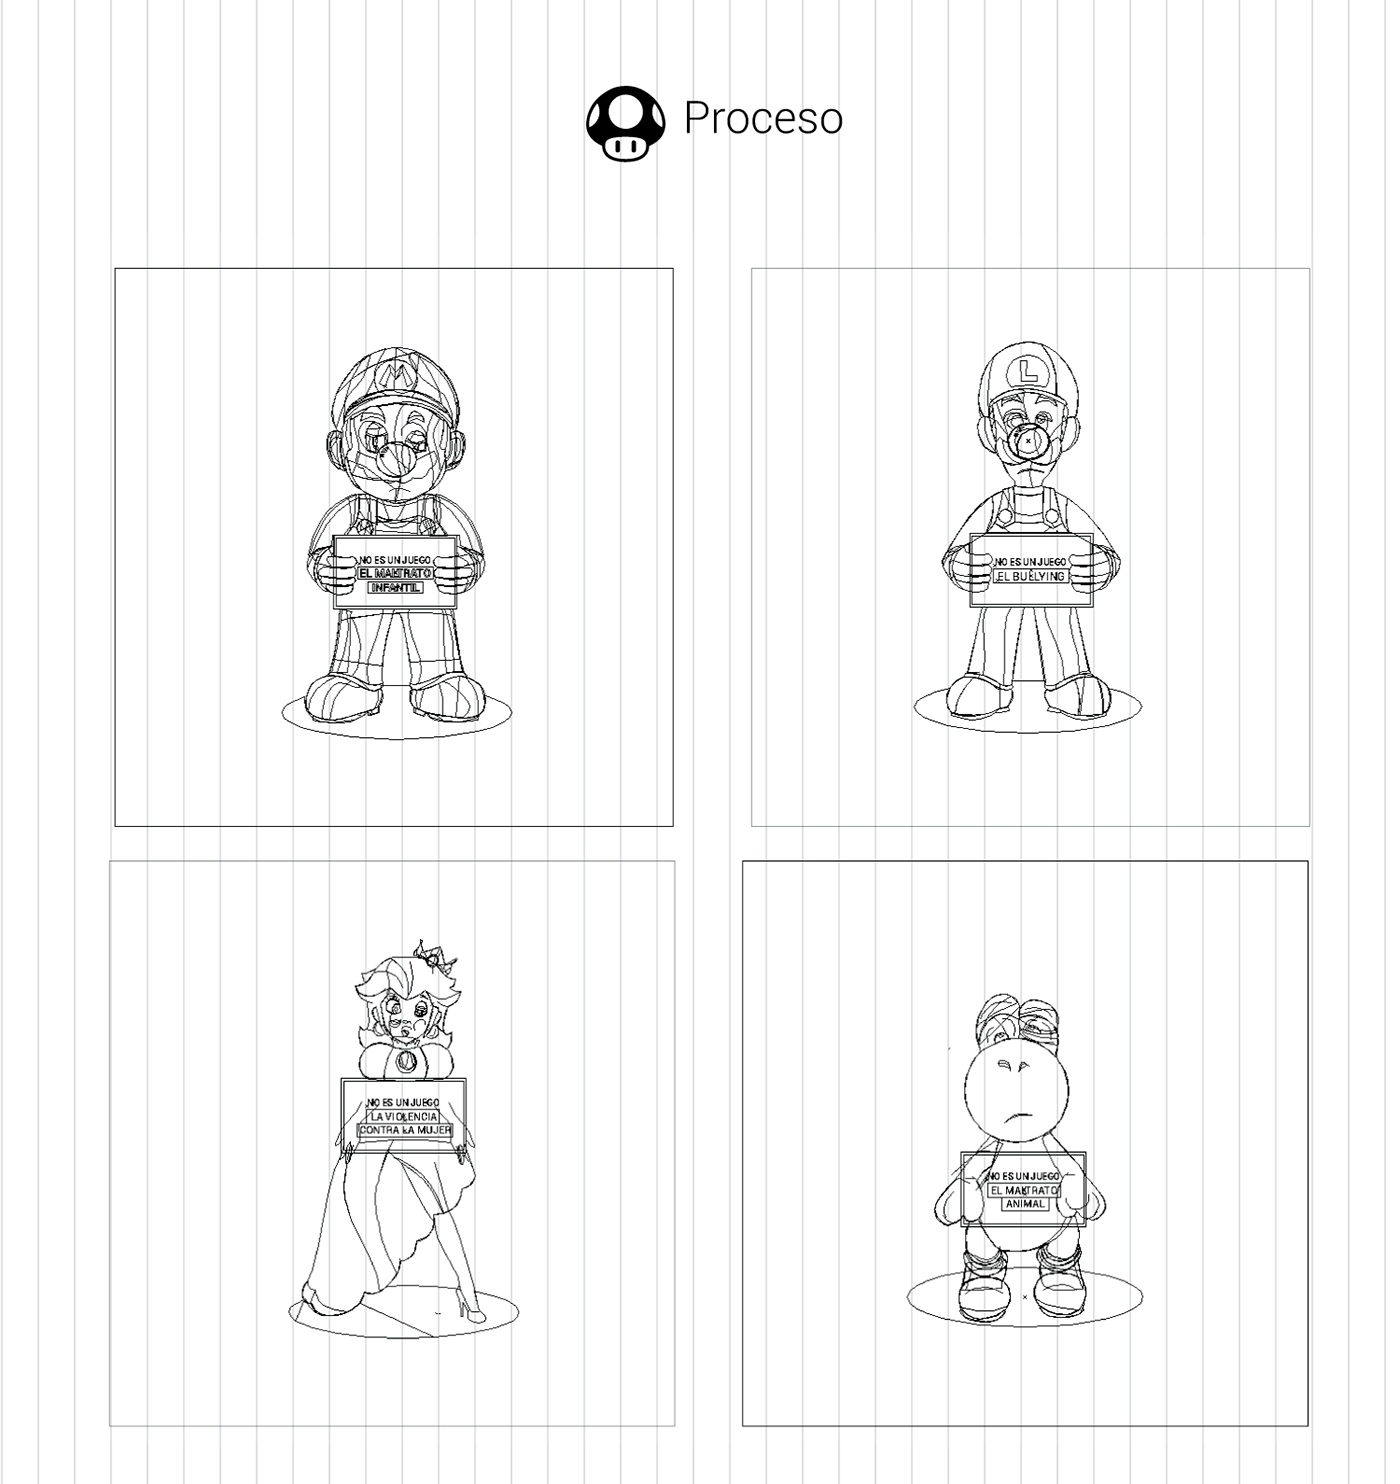 Illustrator Campaña grafica adobe wacom mrpanda ilustracion WROJASA design Nintendo mariobross Luigi yoshi NoEsUnJuego diseño